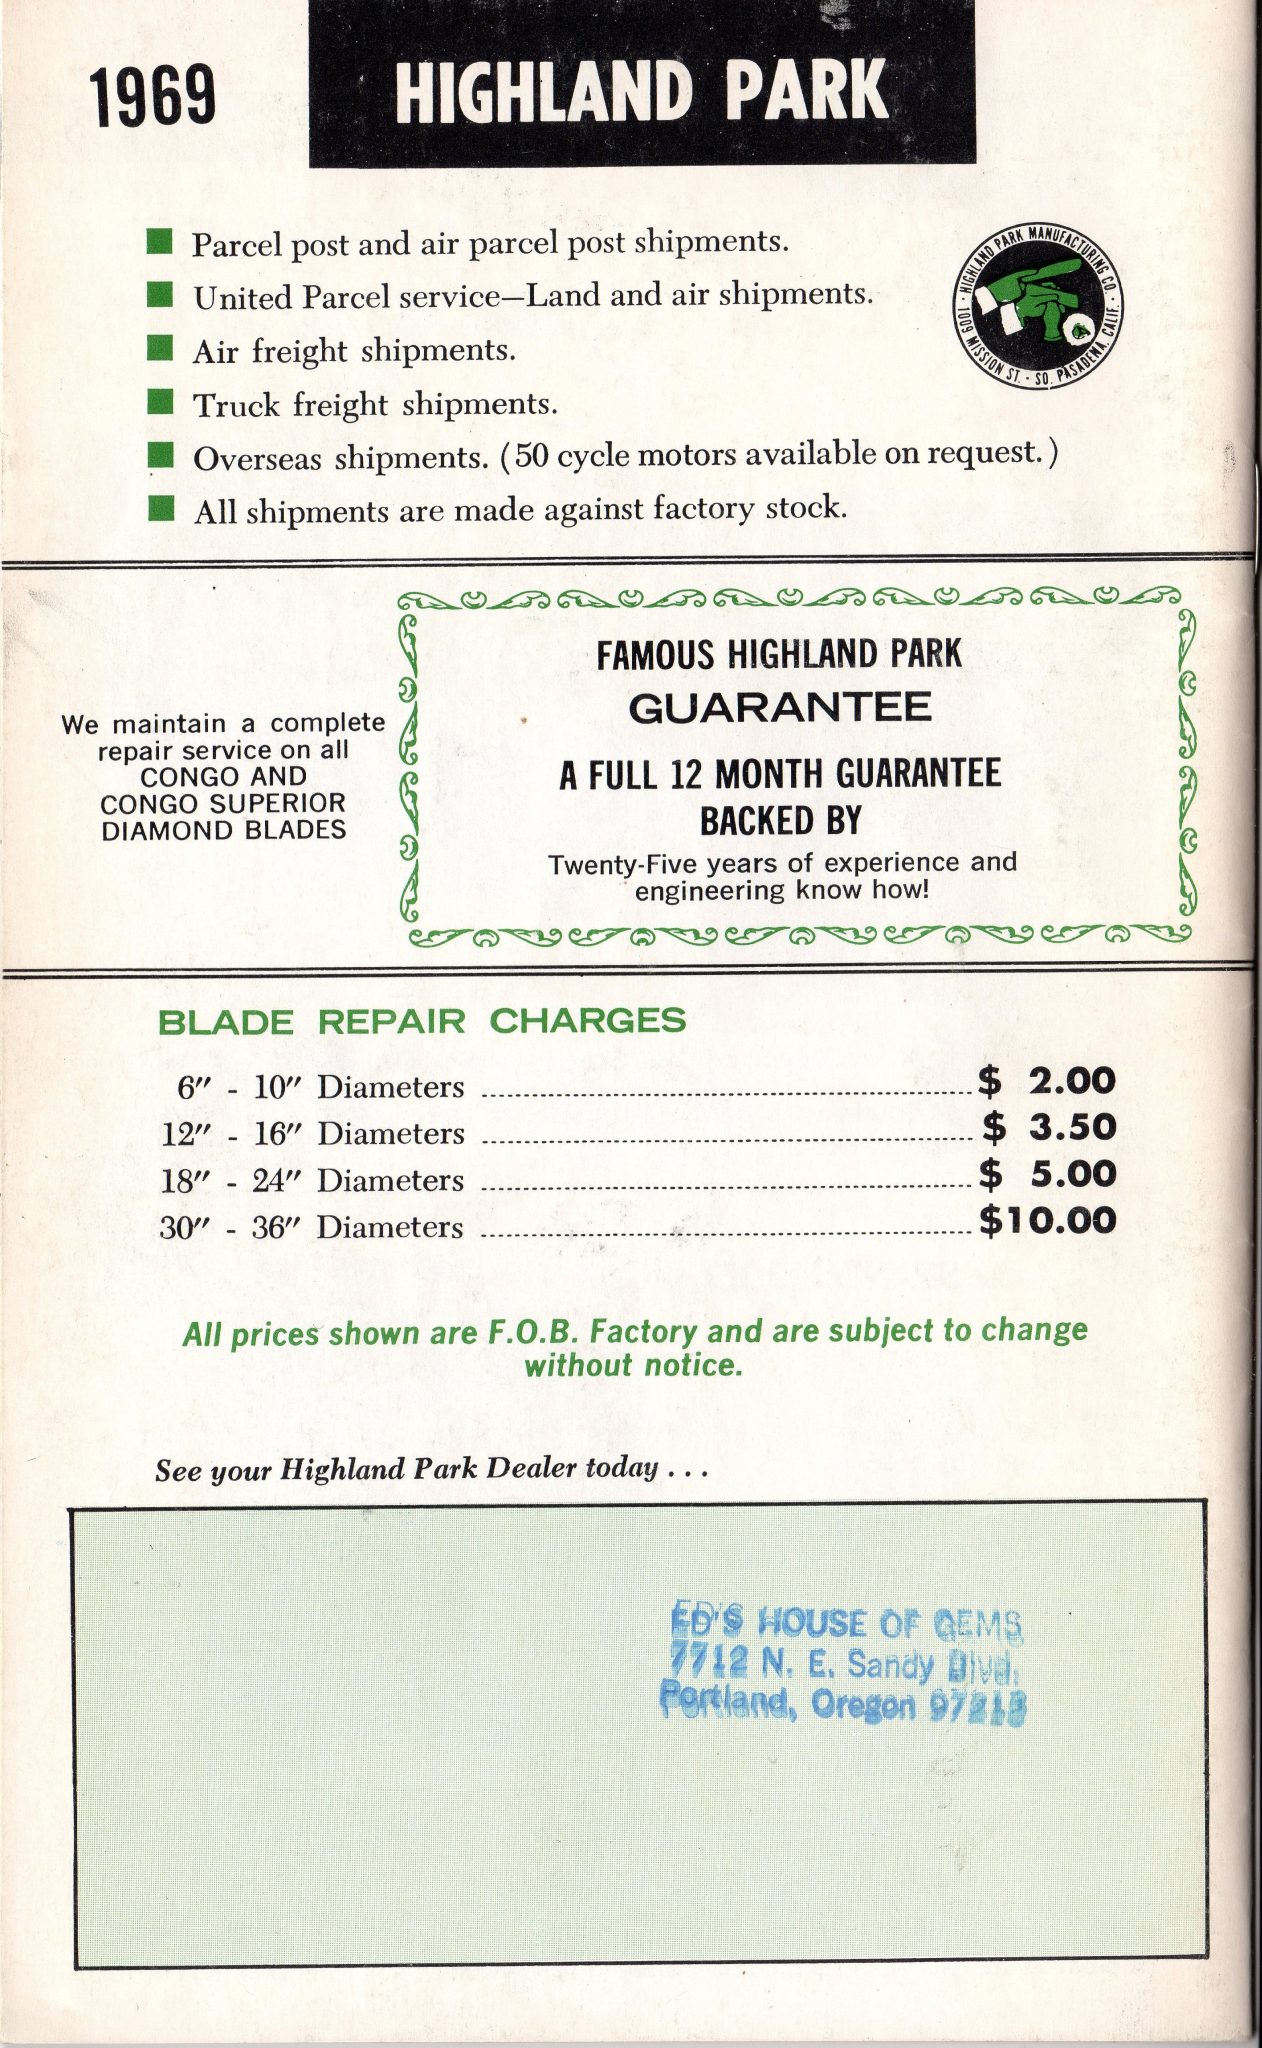 1969 Highland Park Lapidary Equipment Catalog